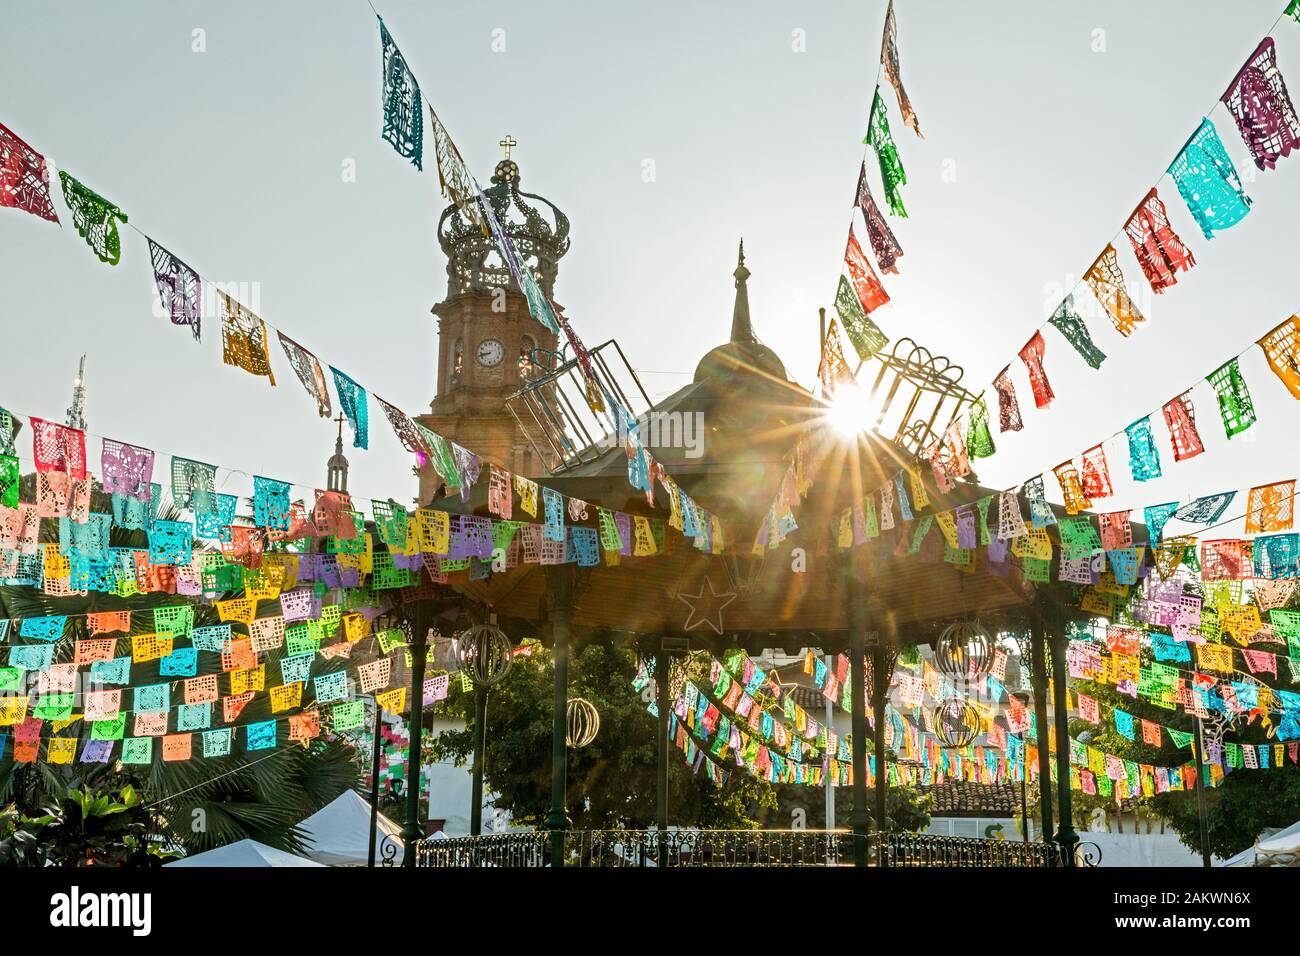 Mexiko, Puerto Vallarta, Jalisco, musikpavillon für ein Festival bei Sonnenaufgang eingerichtet Stockfoto